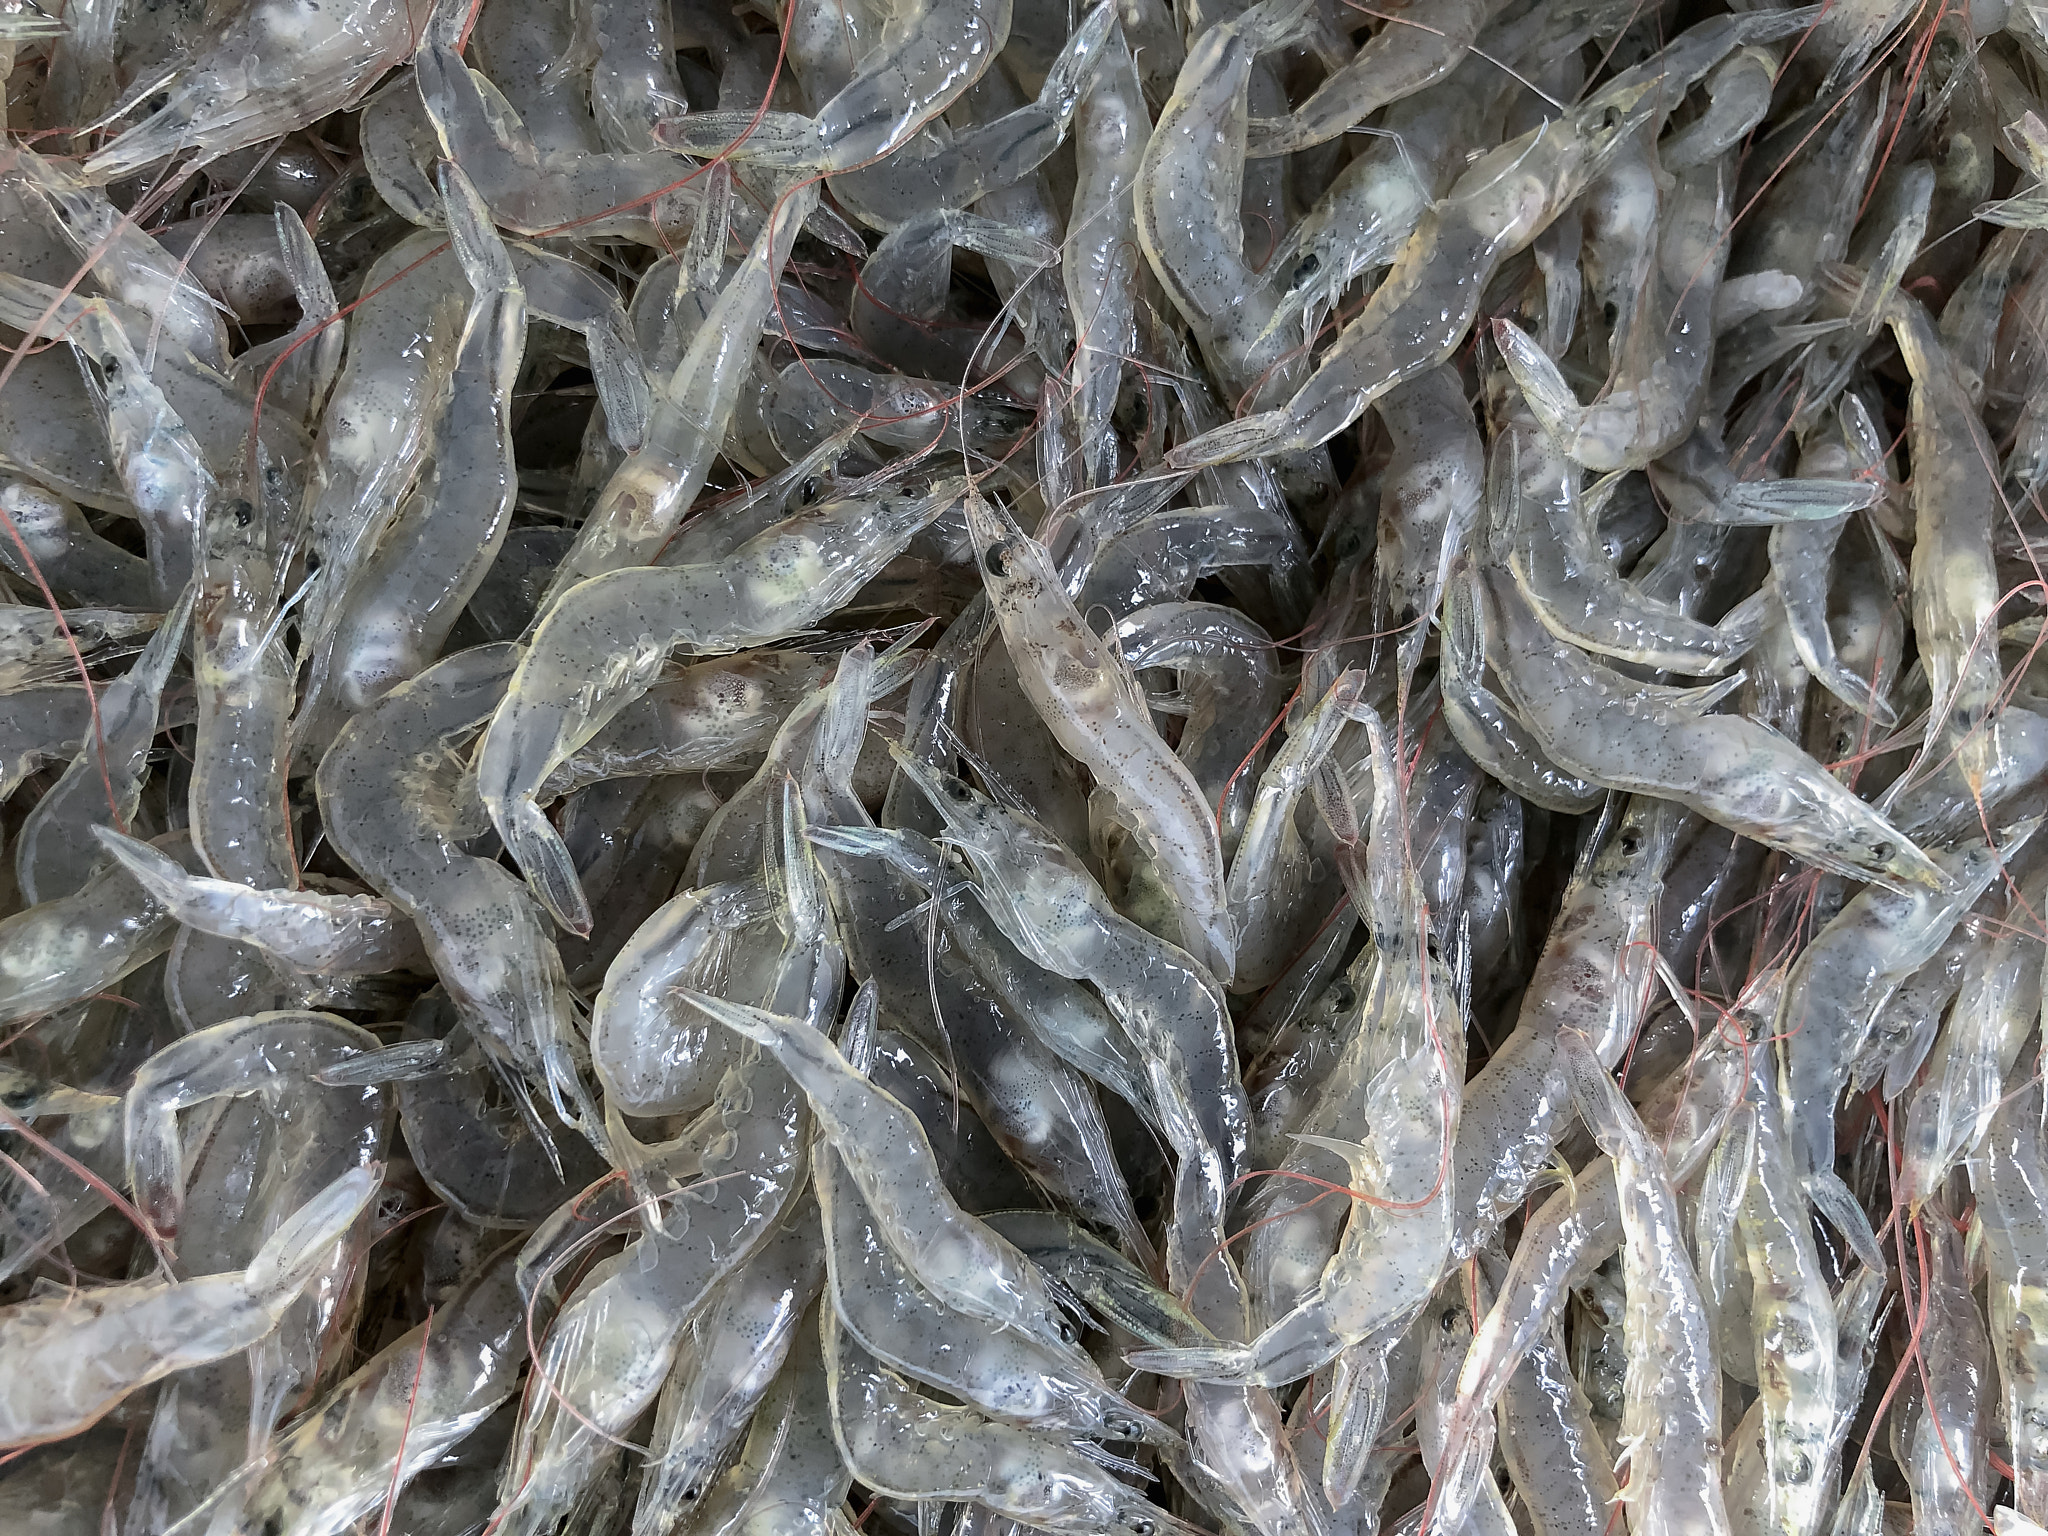 Shrimps, Postlarva stage of Vannamei, White shrimps, Nauplius, Zoea, Mysis, Larvae. Background.